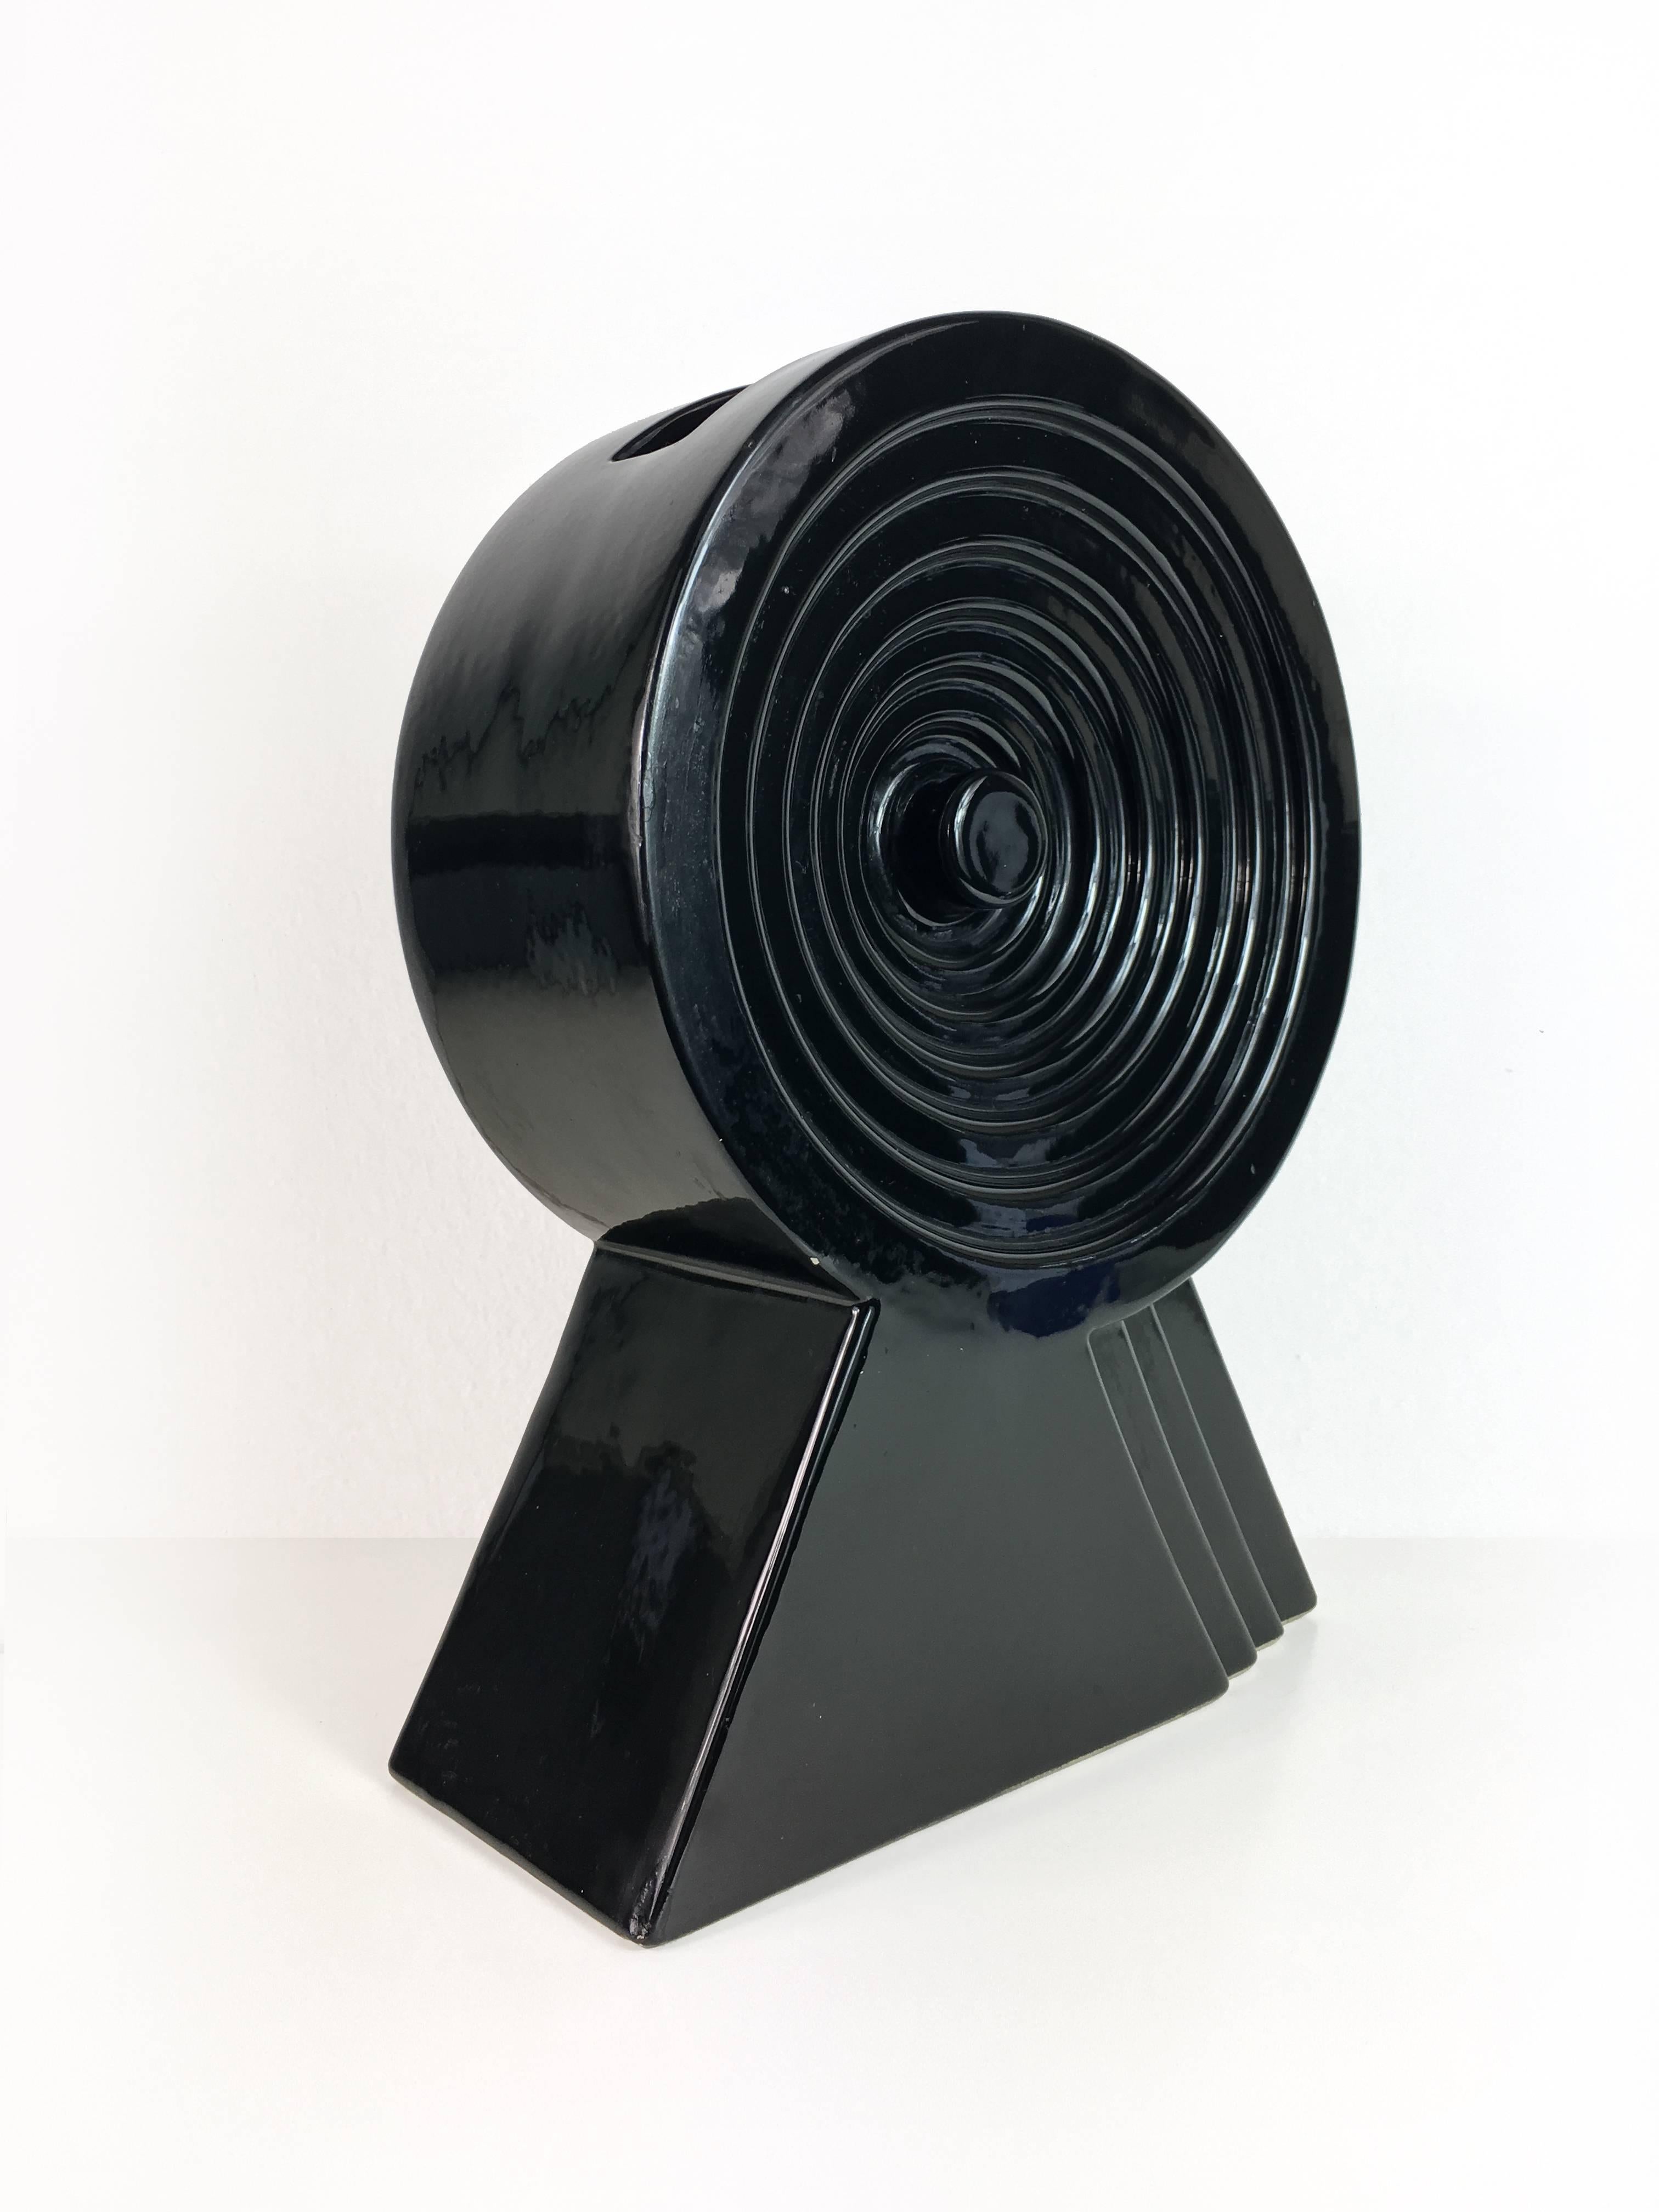 Black glazed ceramic vase with geometric forms. Was created as the part of Yantra series, Edizioni Arte design.